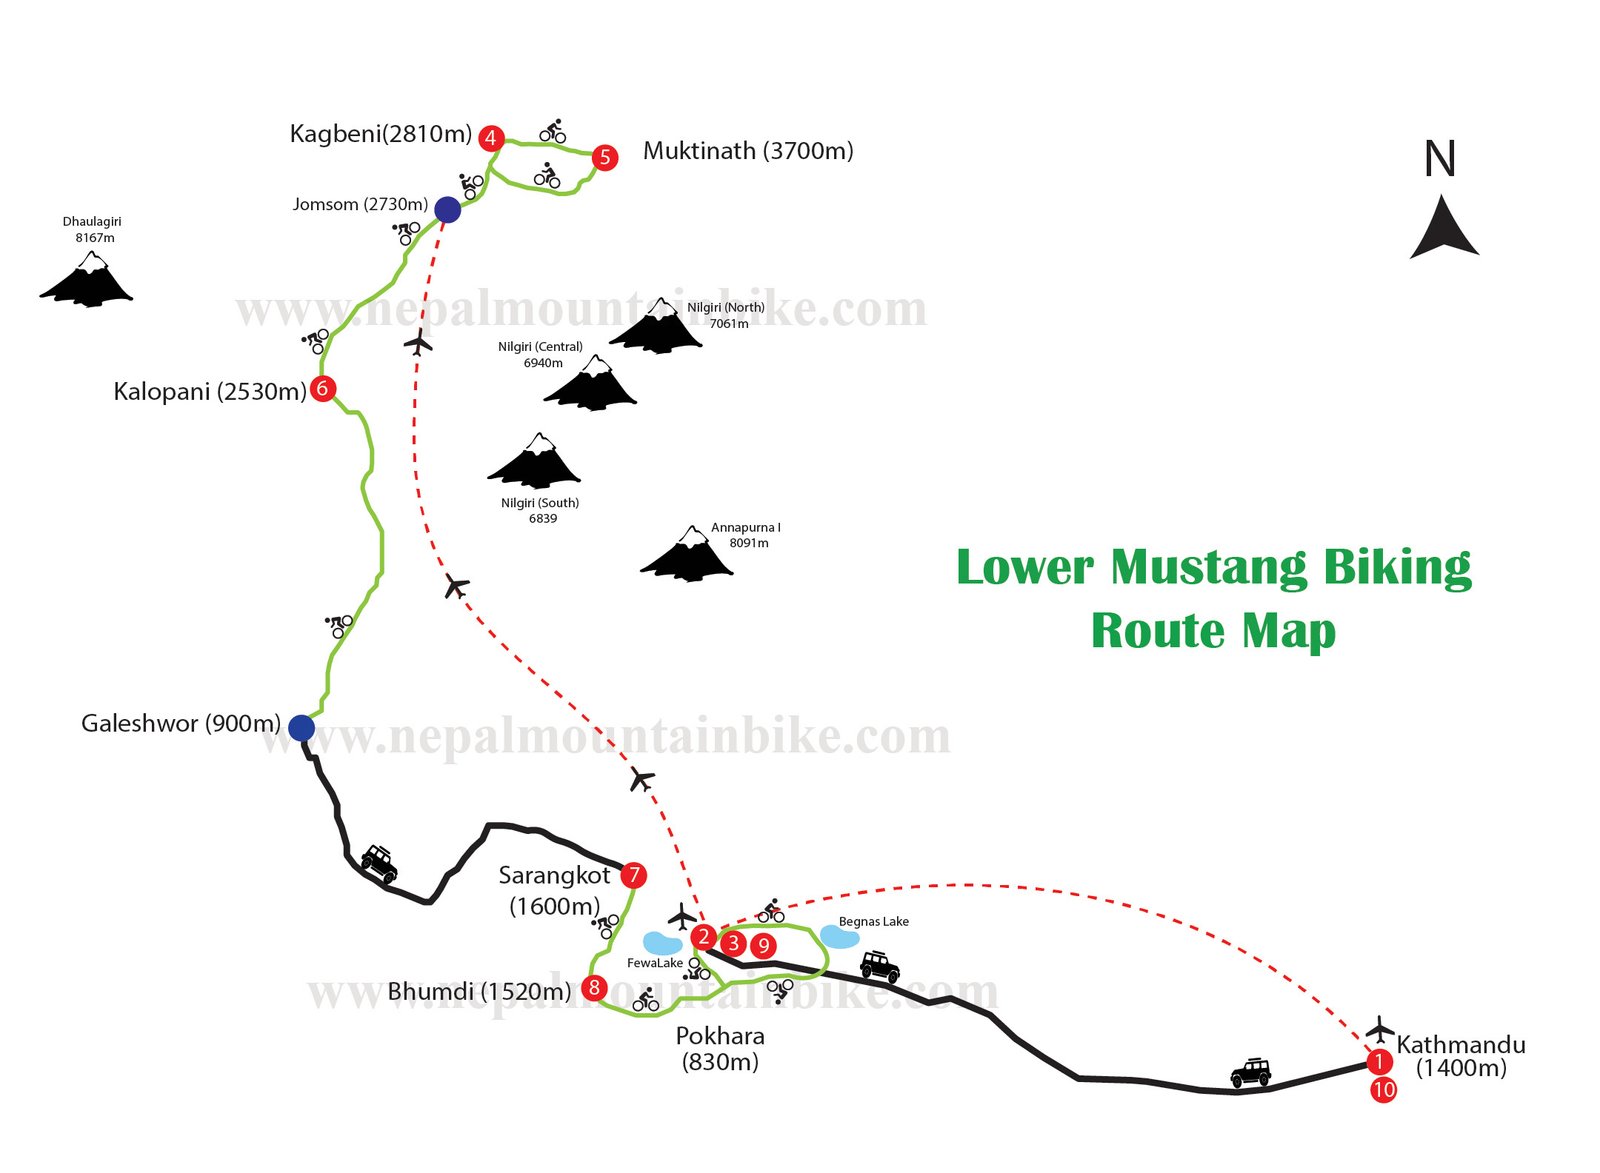 Jomsom-Muktinath mountain bike trail map.